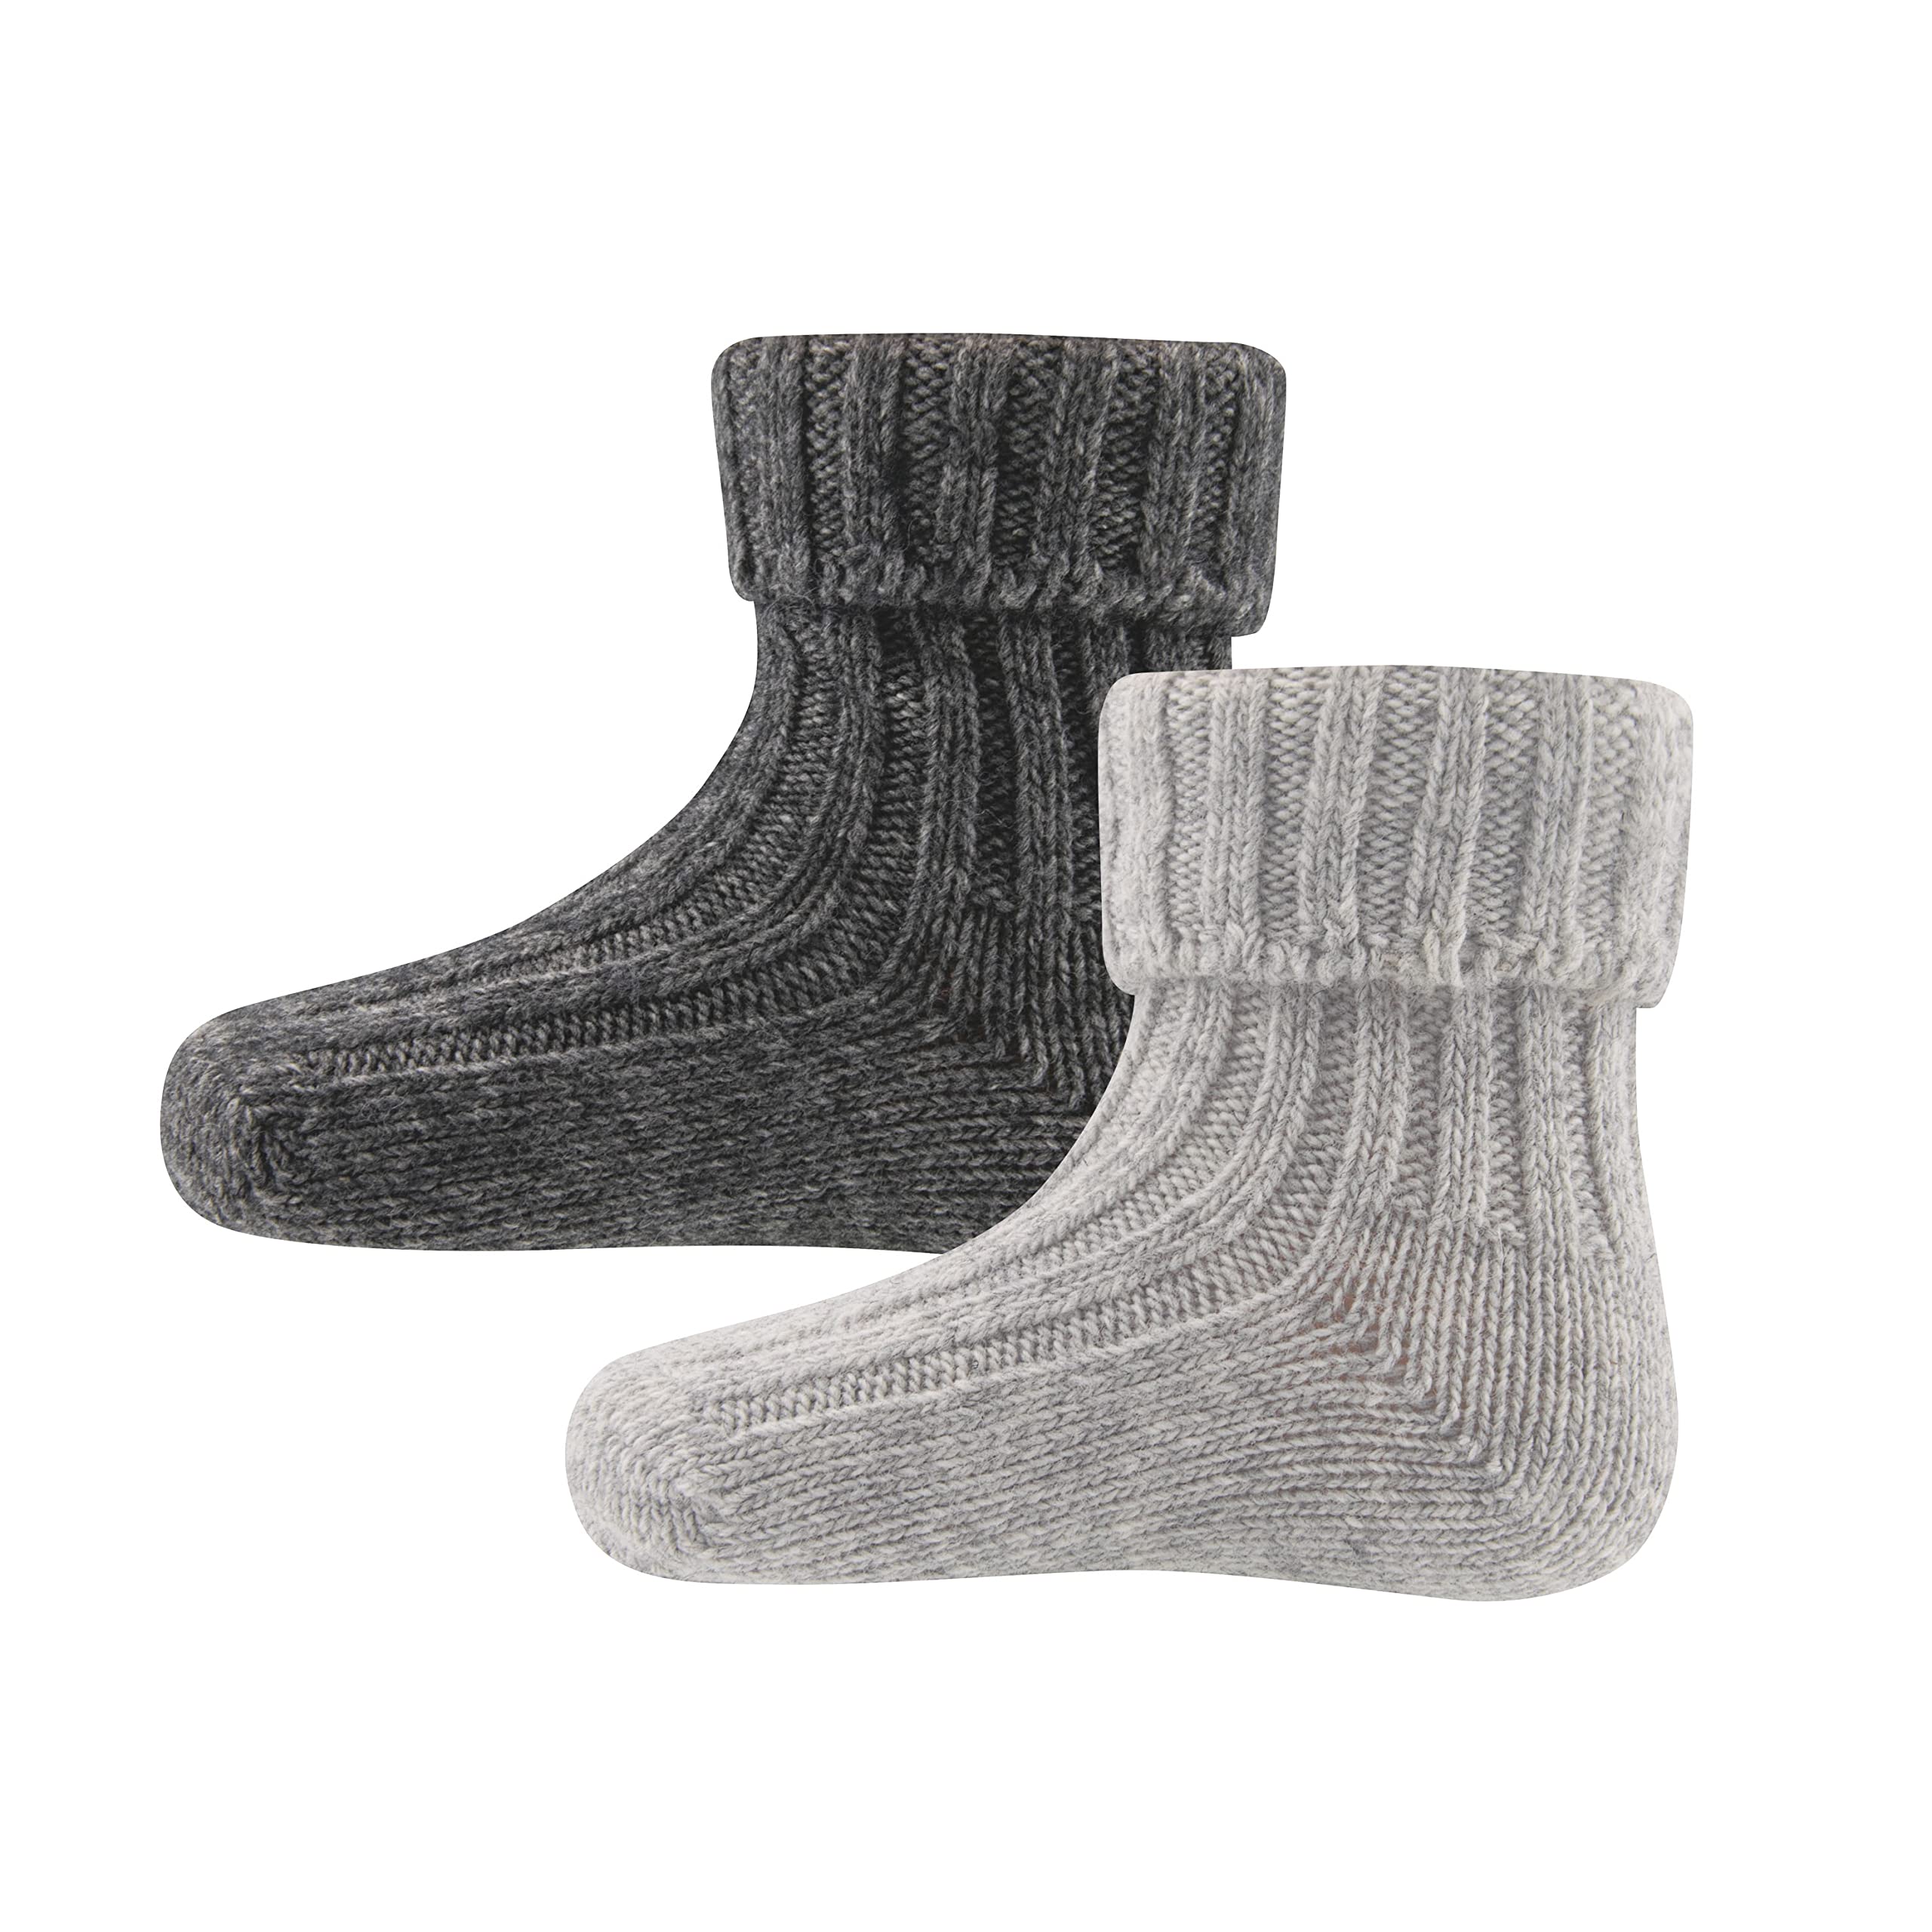 EWERS 2er-Pack Woll-Socken für Kinder, 2 Paar Kindersocken einfarbig grau, Bio-Baumwolle, GOTS zertifiziert, MADE IN EUROPE, hell- & dunkelgrau, Größe 23-26